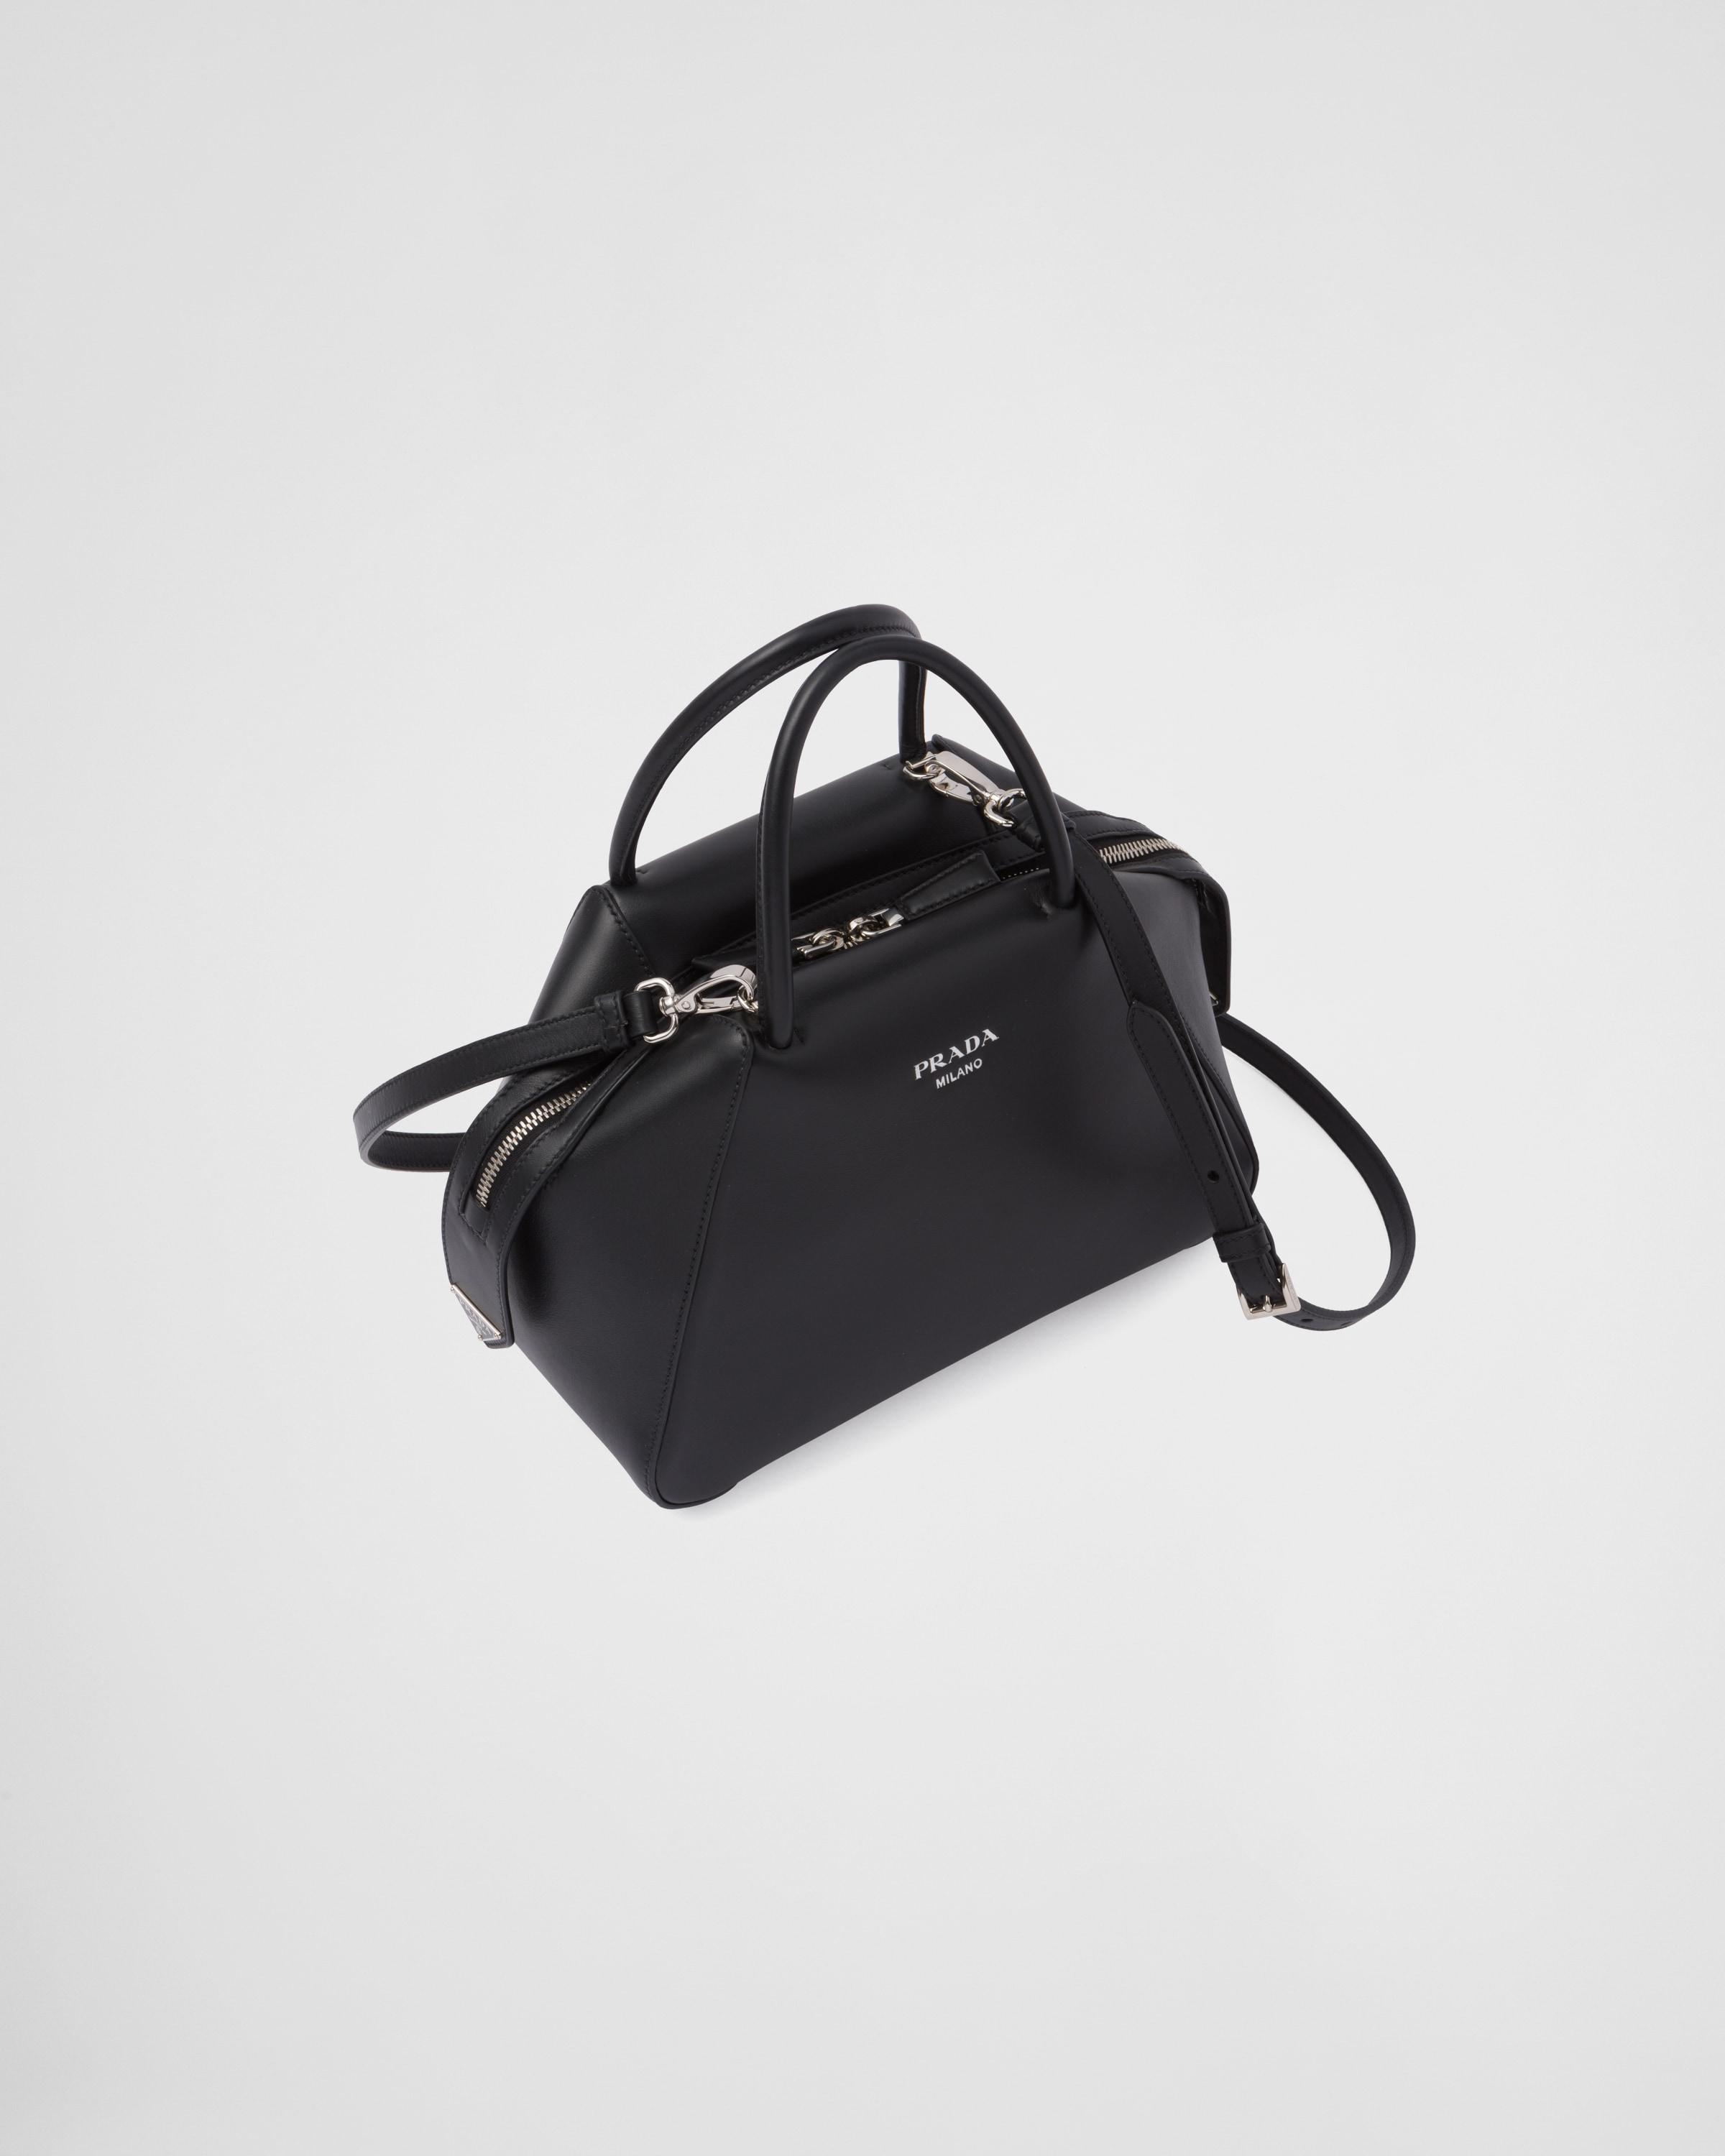 Prada Small Leather Supernova Handbag in Black | Lyst